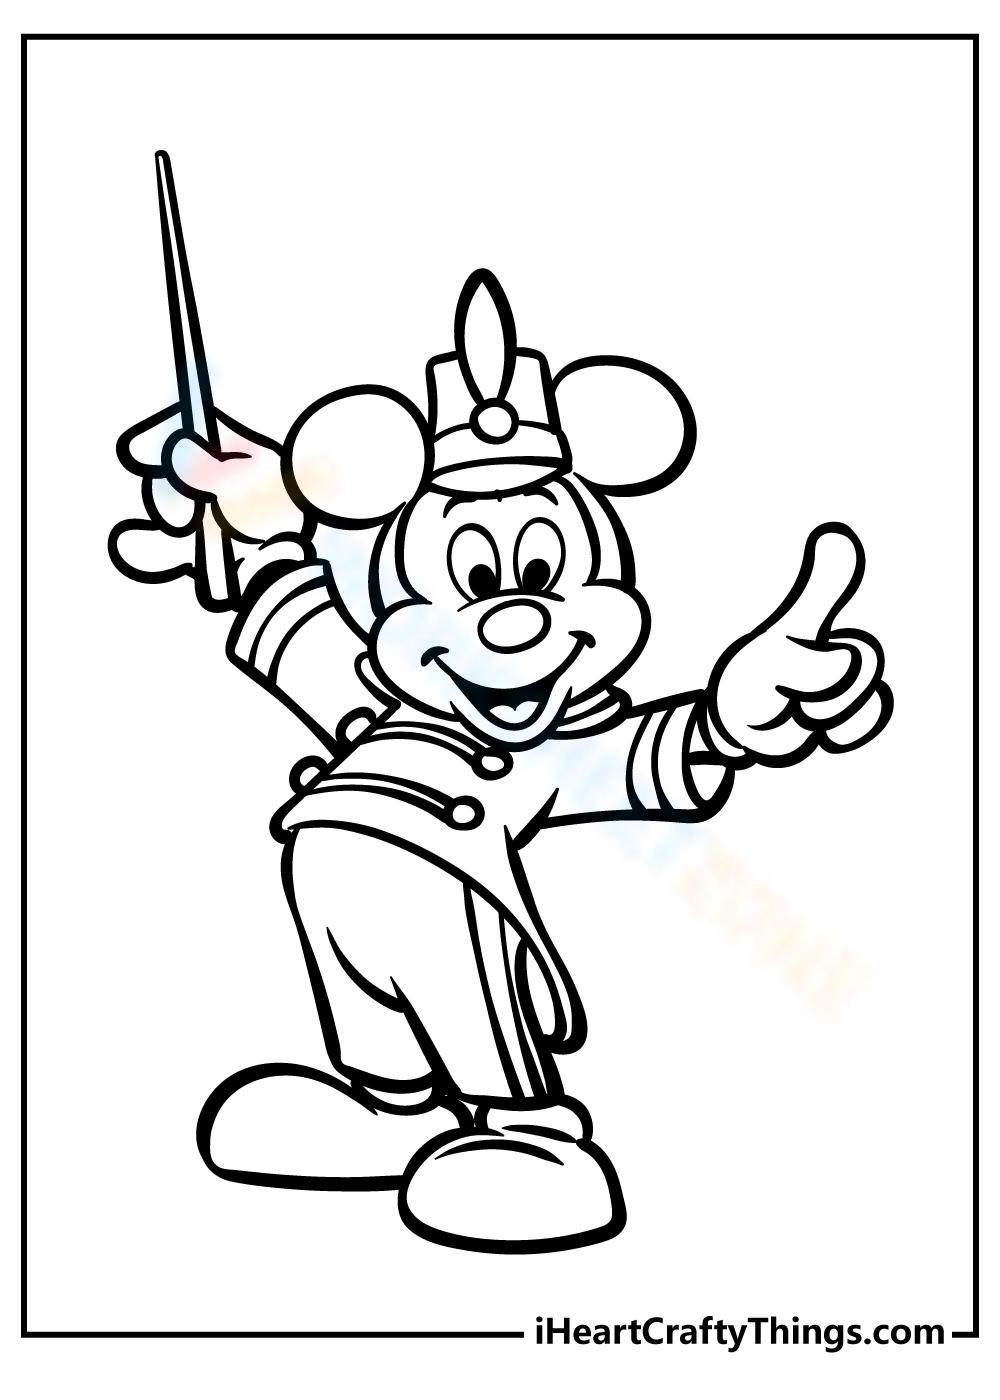 Mickey as a parade conductor